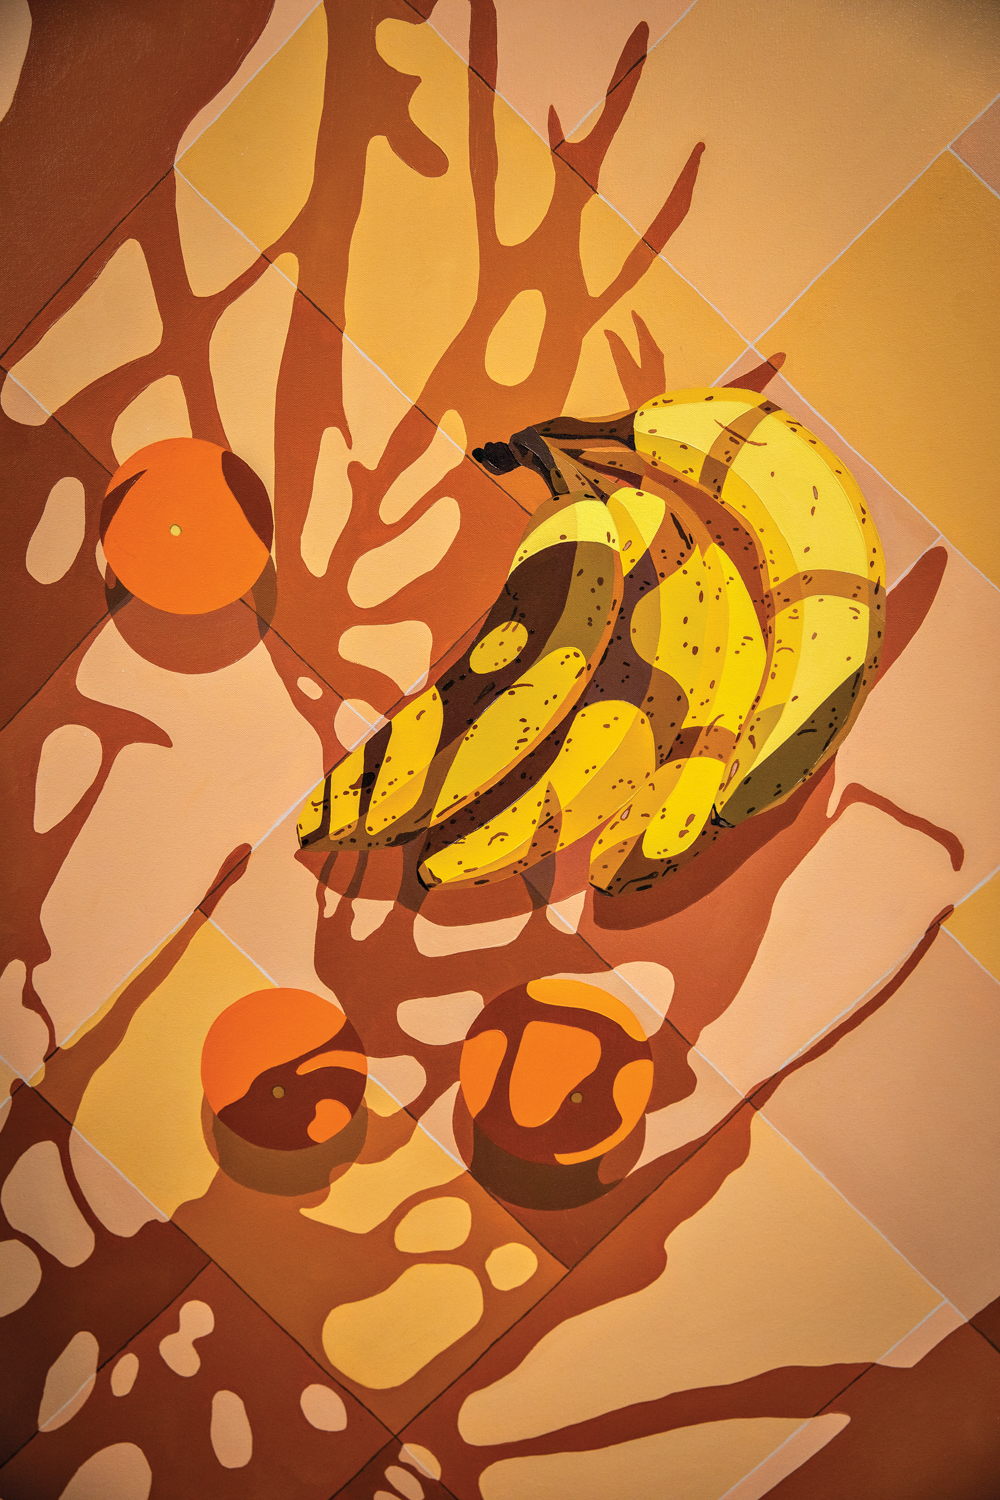 oil painting by Natalia Juncadella of bananas and oranges on terra-cotta flooring under shadows